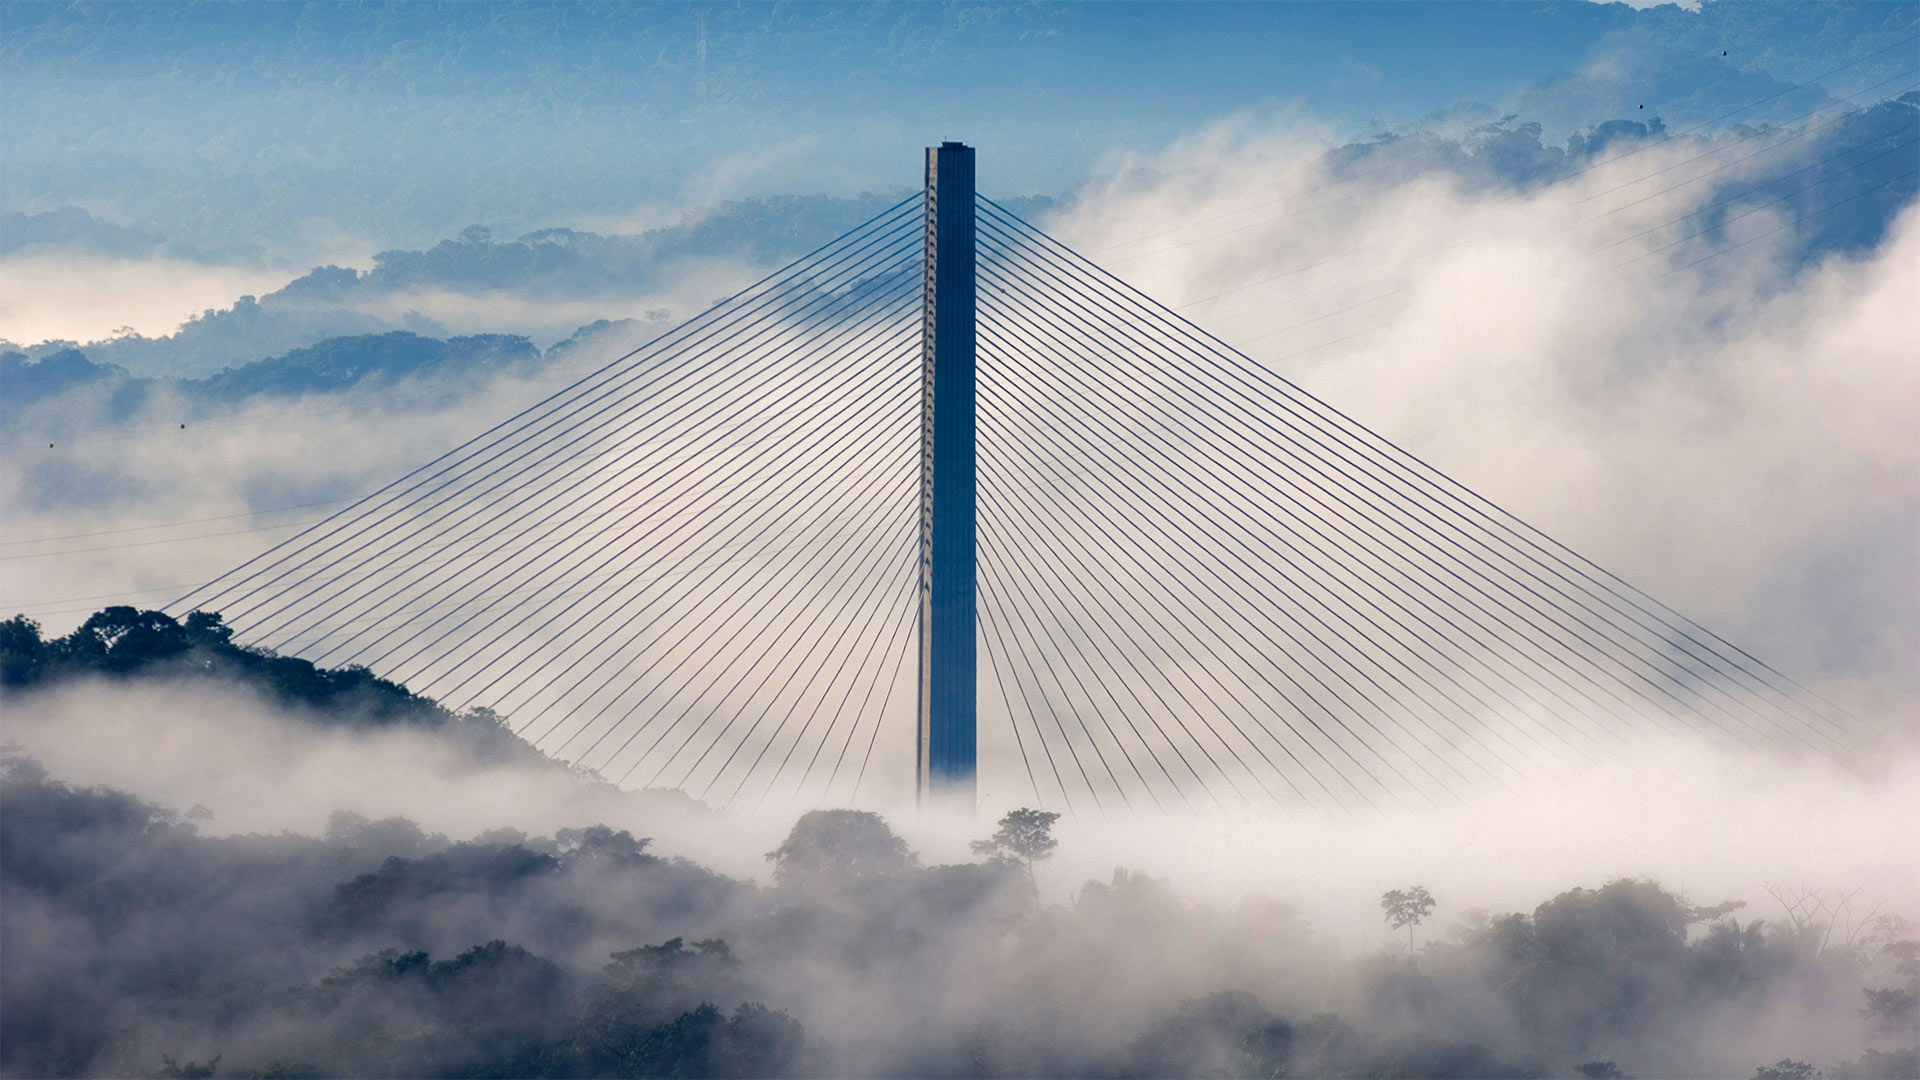 Centennial Bridge towering above Soberanía National Park, Panama - David Tipling/Universal Images Group via Getty Images)